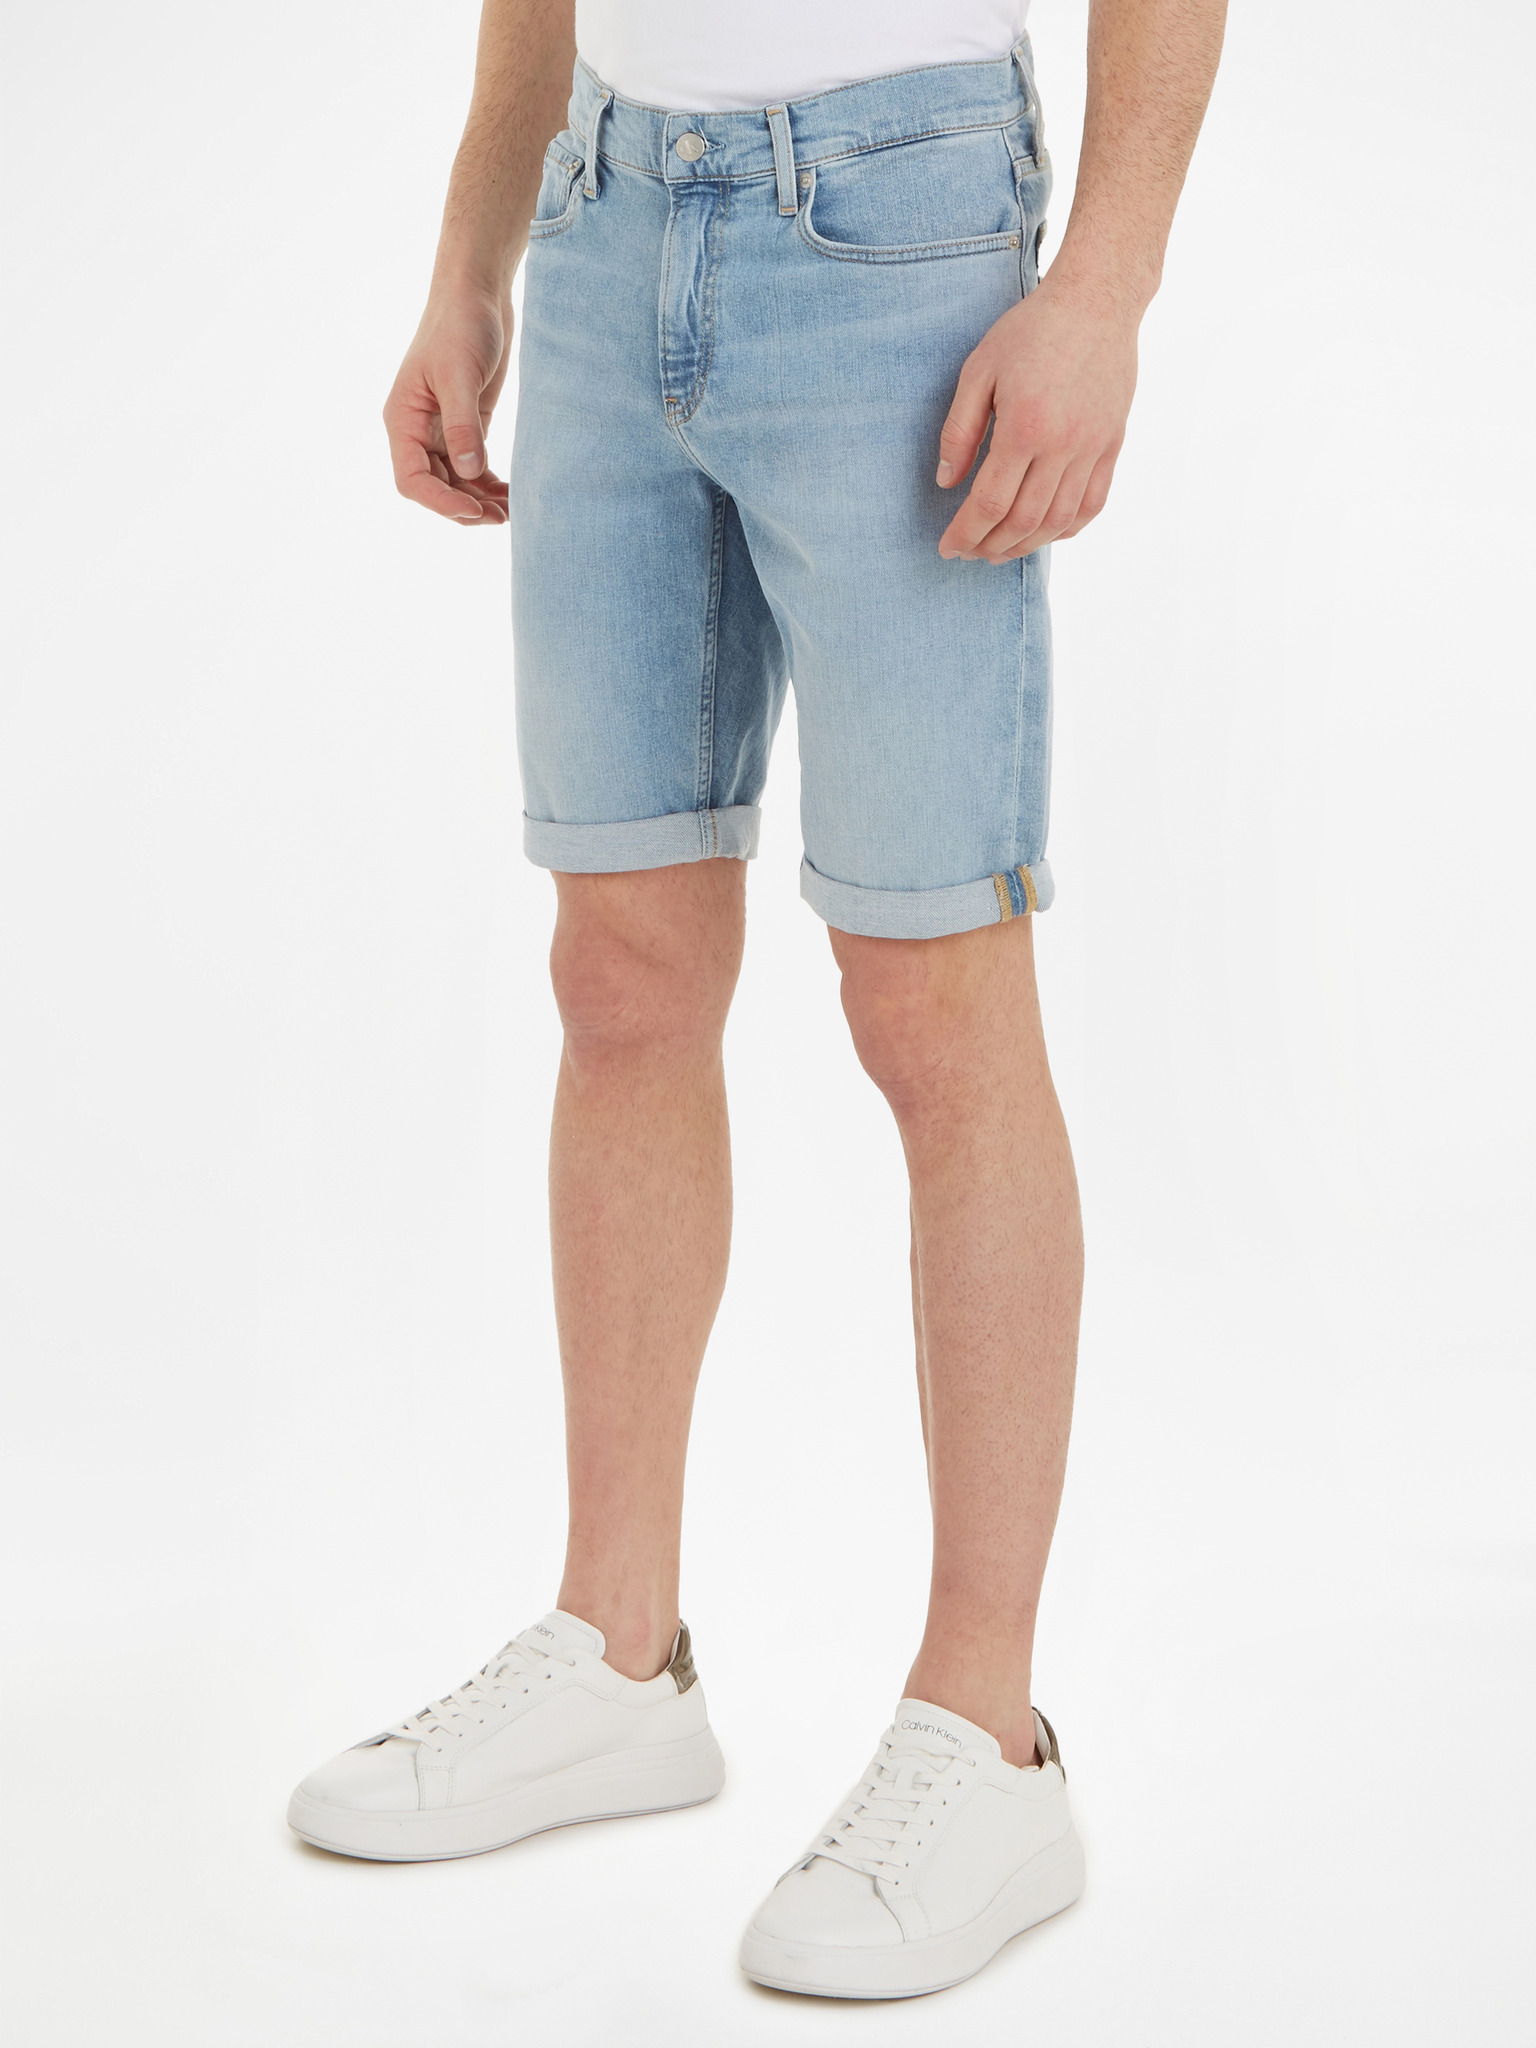 2018new Summer Stretch Thin high quality cotton Denim Jeans male Short Men  blue black Soft fashion casual Shorts Pants Plus Size - OnshopDeals.Com